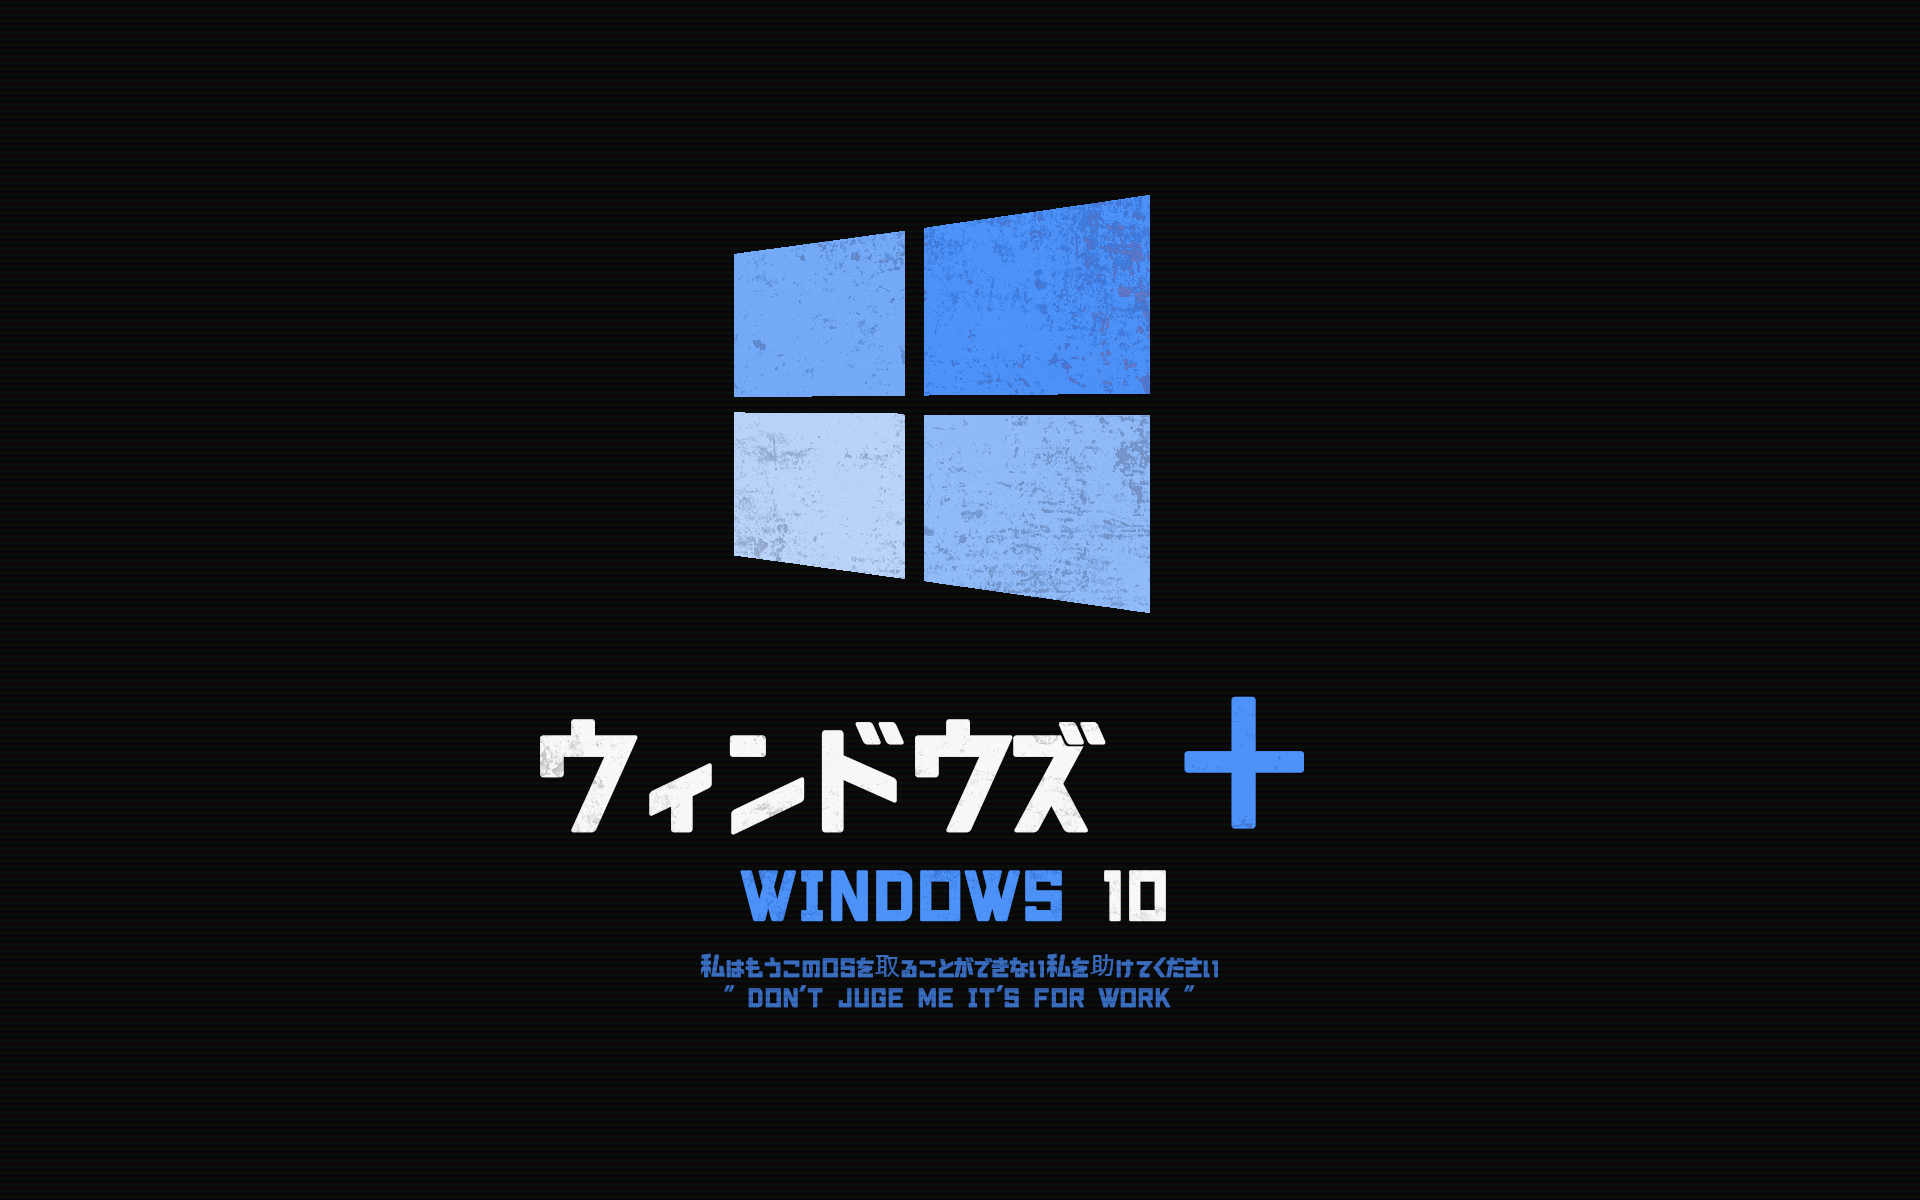 Windows 10 logo on a black background - Windows 10